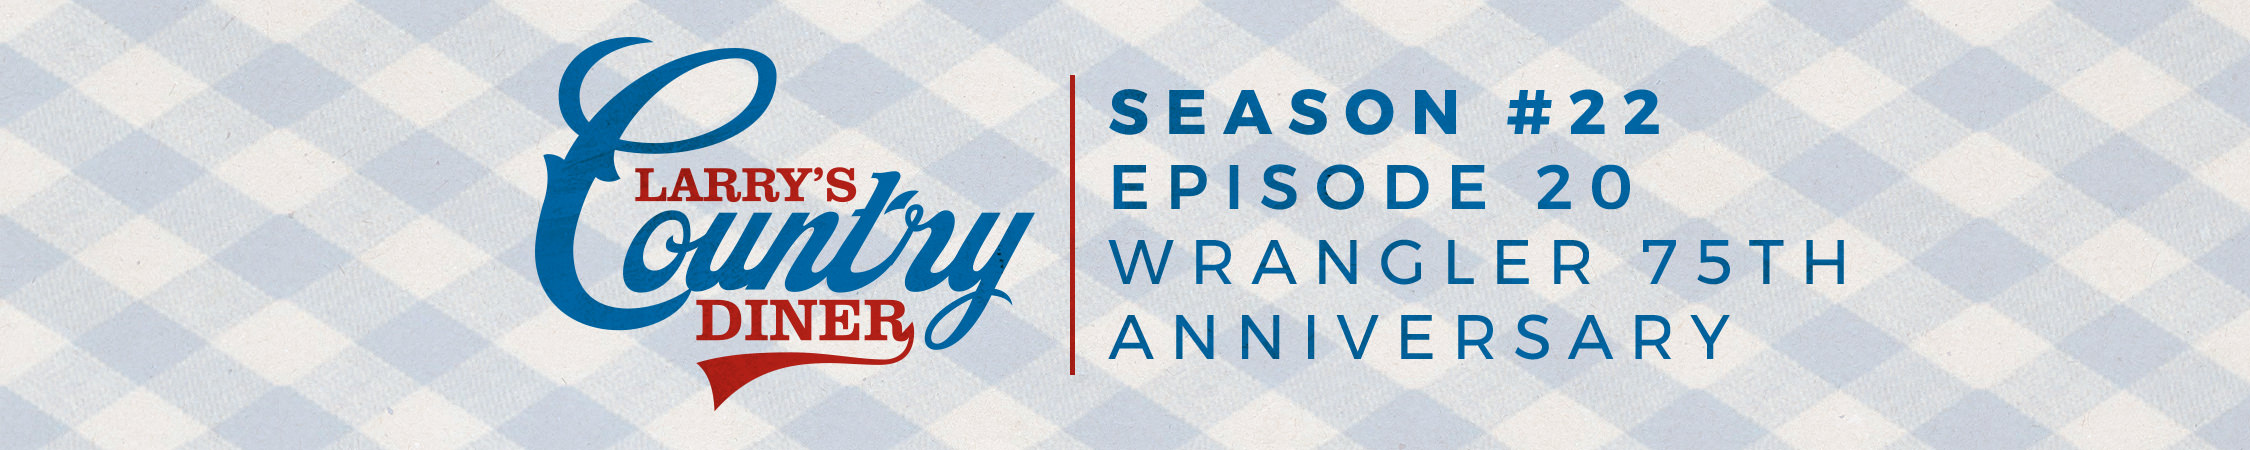 Larry's Country Diner Celebrating Wrangler's 75th Anniversary Banner